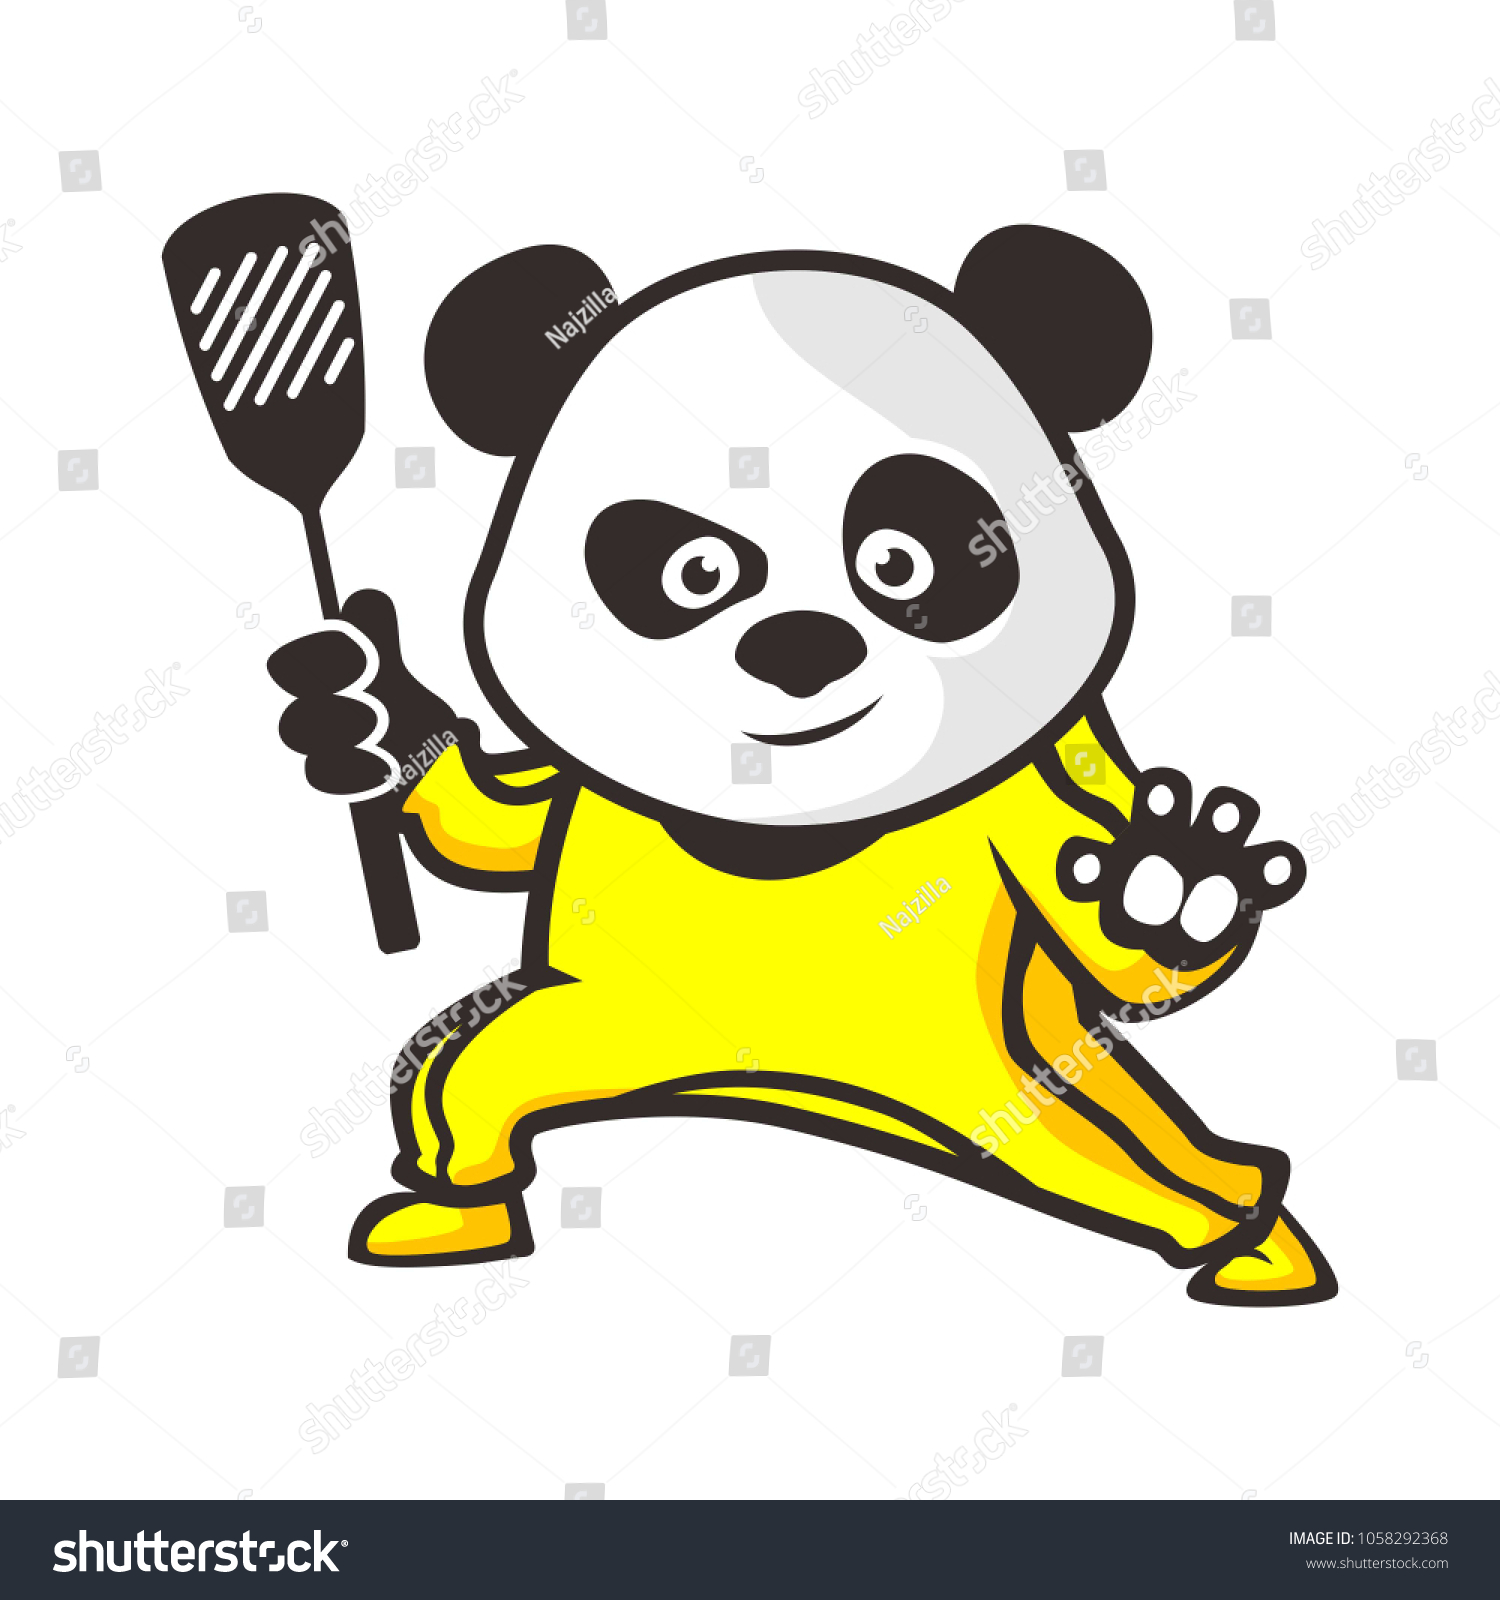 SVG of Vector mascot, cartoon, and illustration of a panda kungfu chef. svg